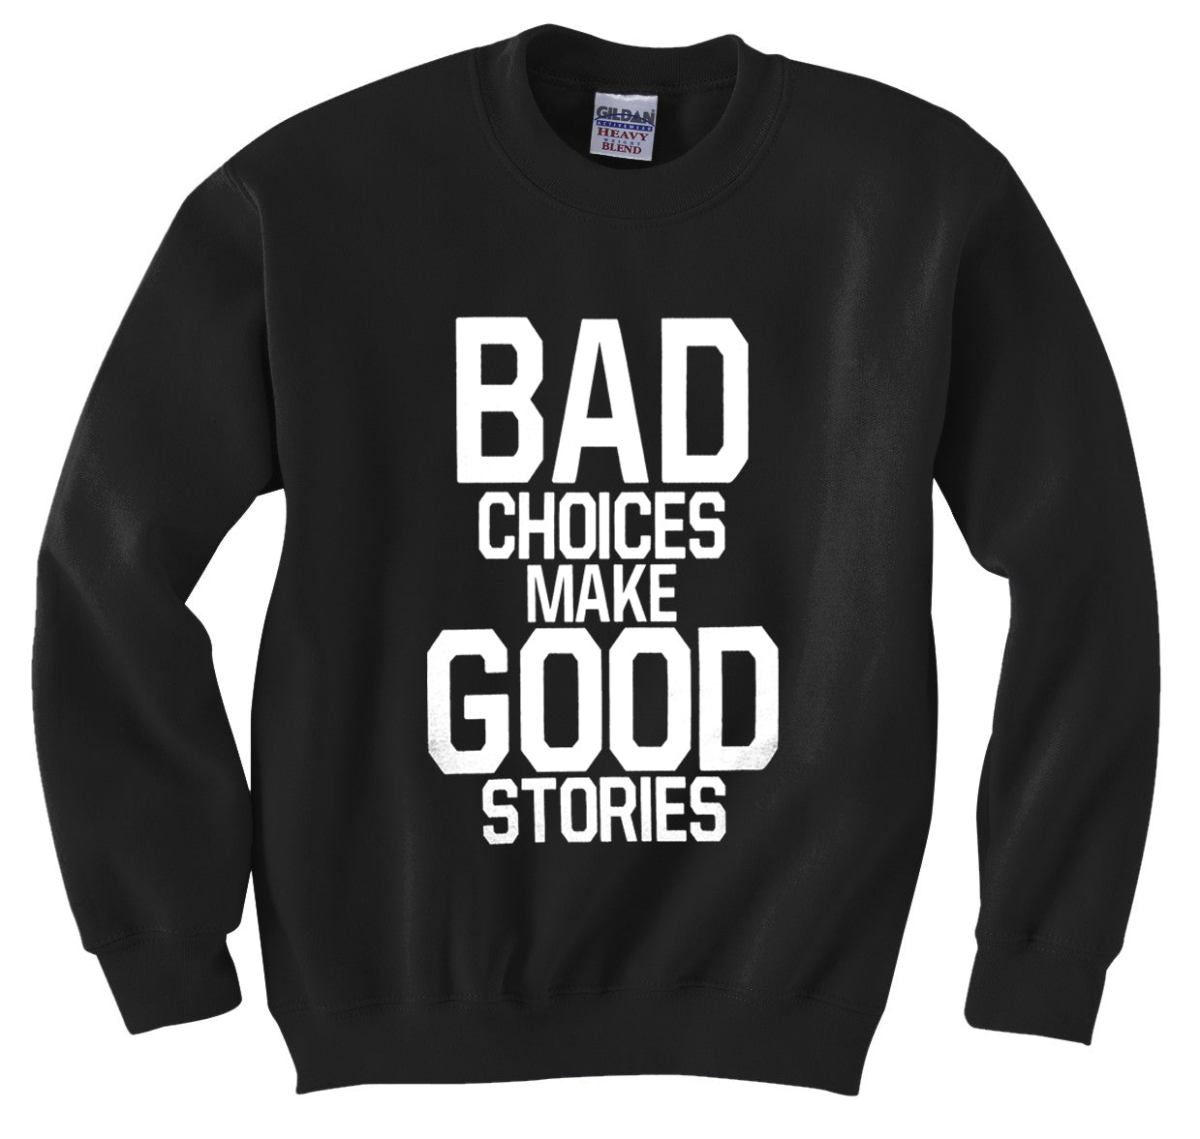 Bad choices make good stories